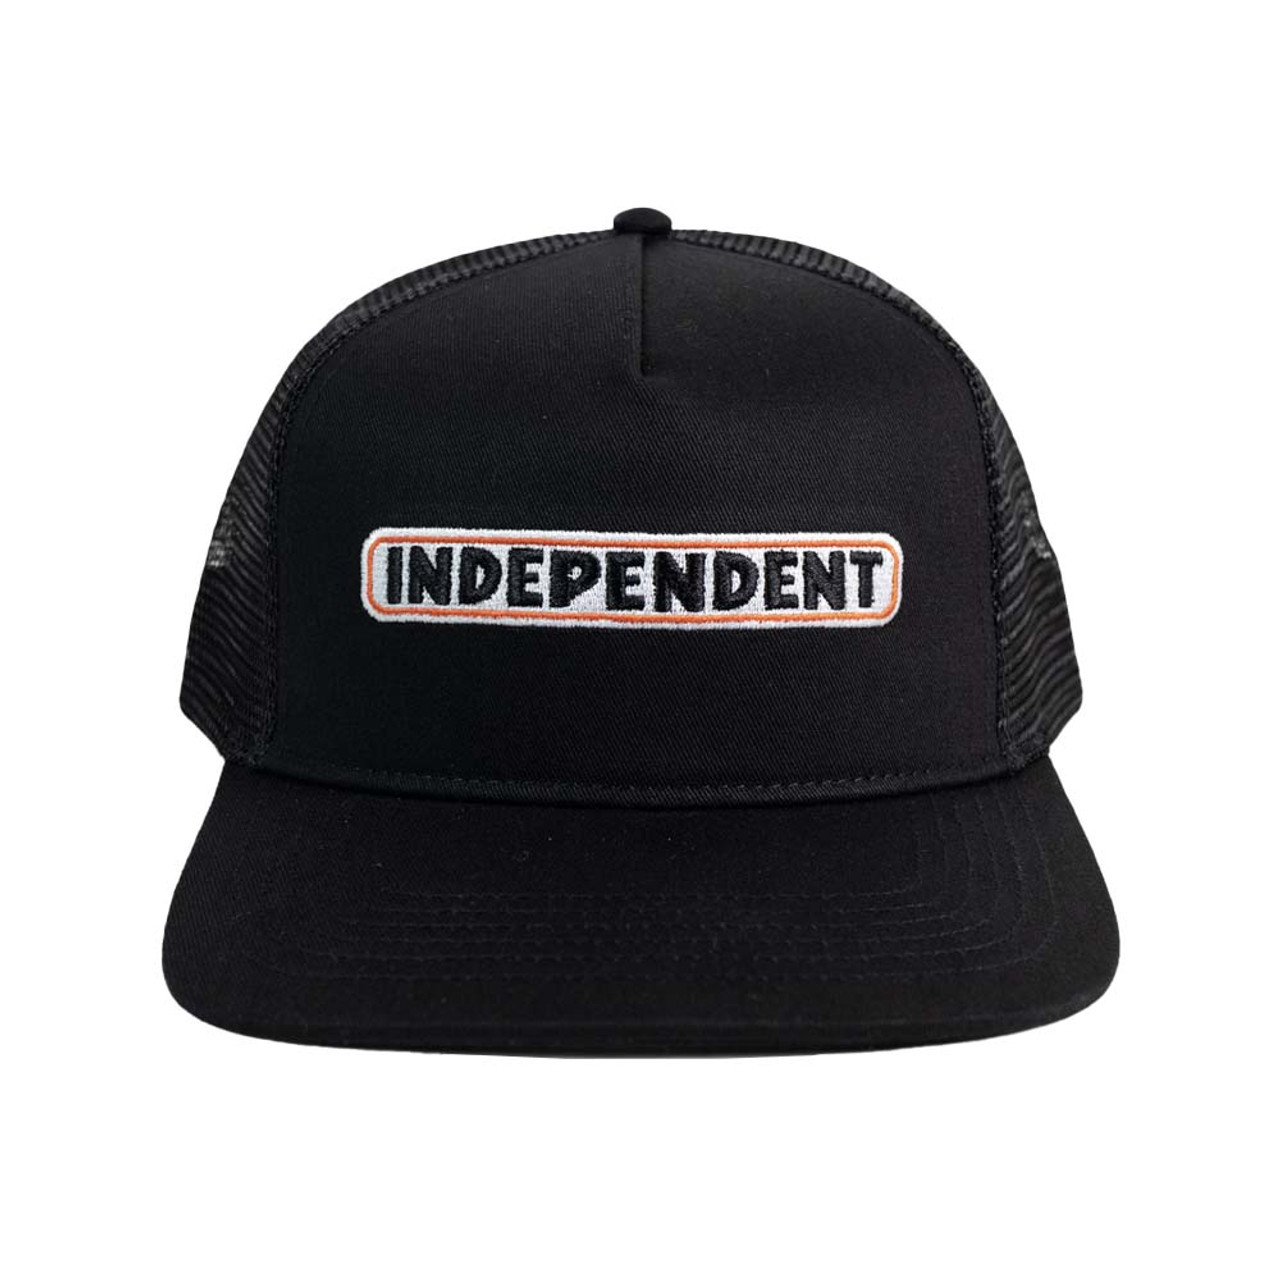 INDEPENDENT Bar Trucker Cap Black